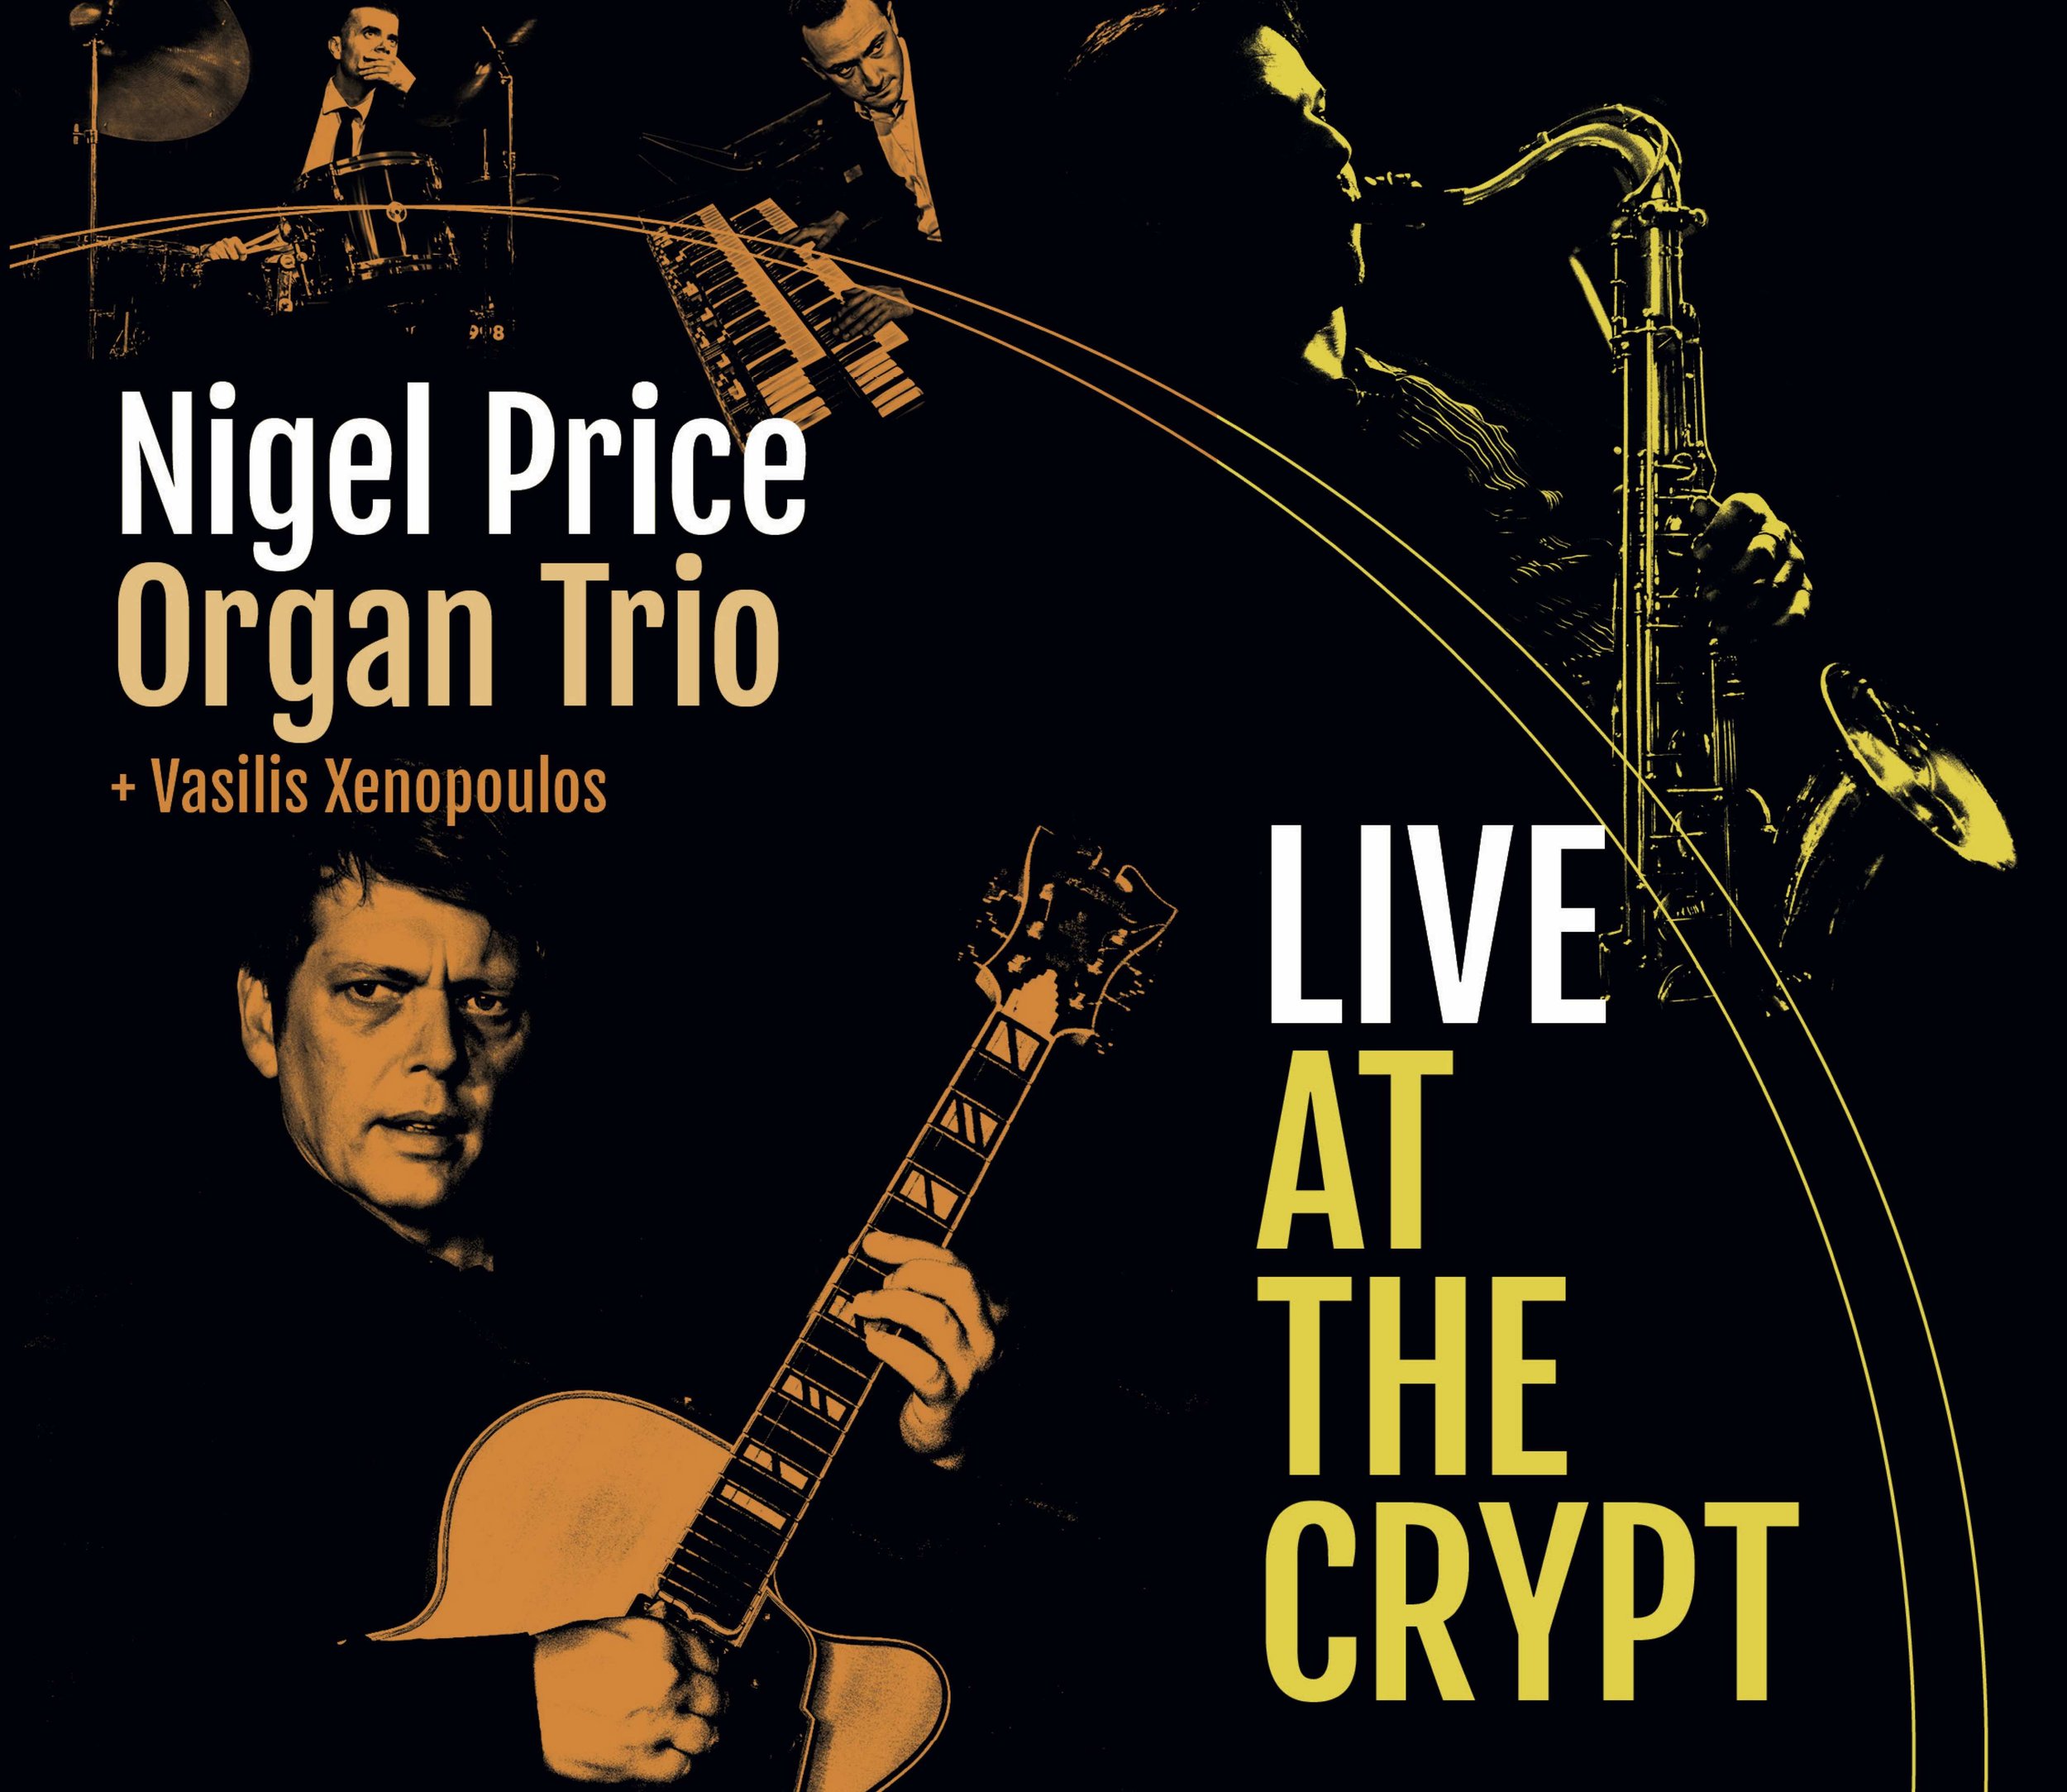 NIGEL PRICE - Nigel Price Organ Trio & Vasilis Xenopoulos : cover 